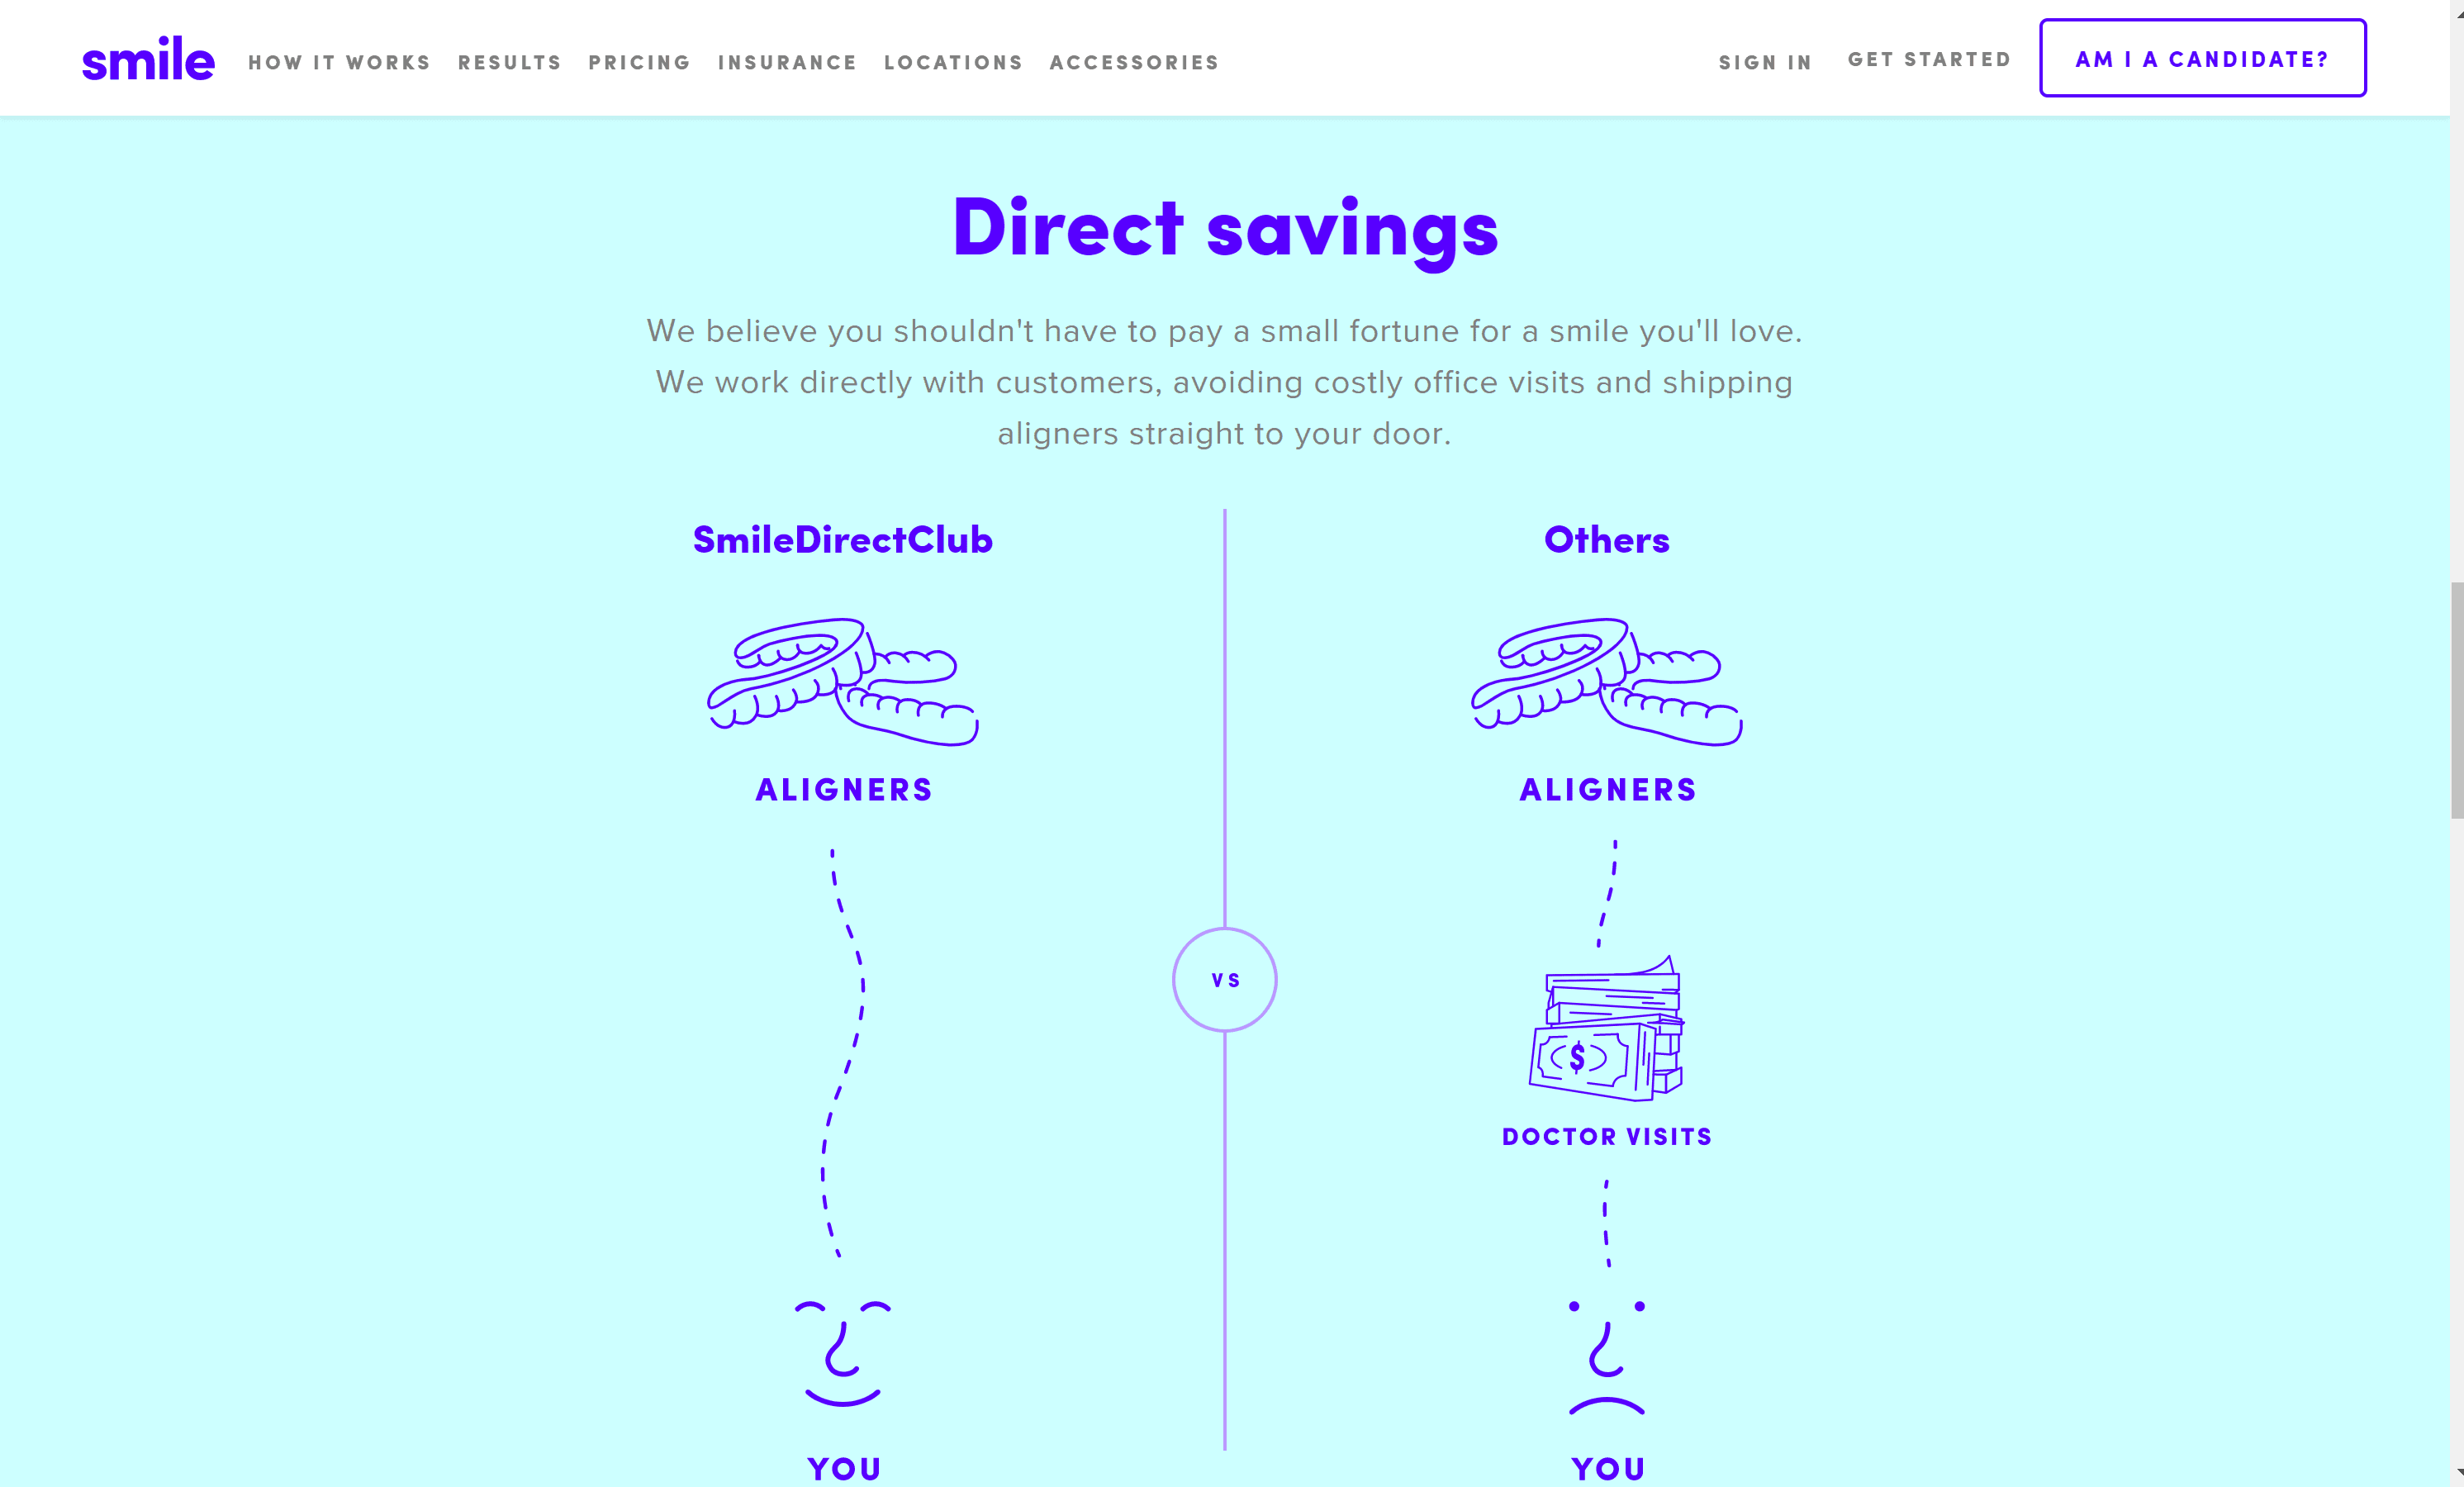 Smile direct club pricing - Direct savings